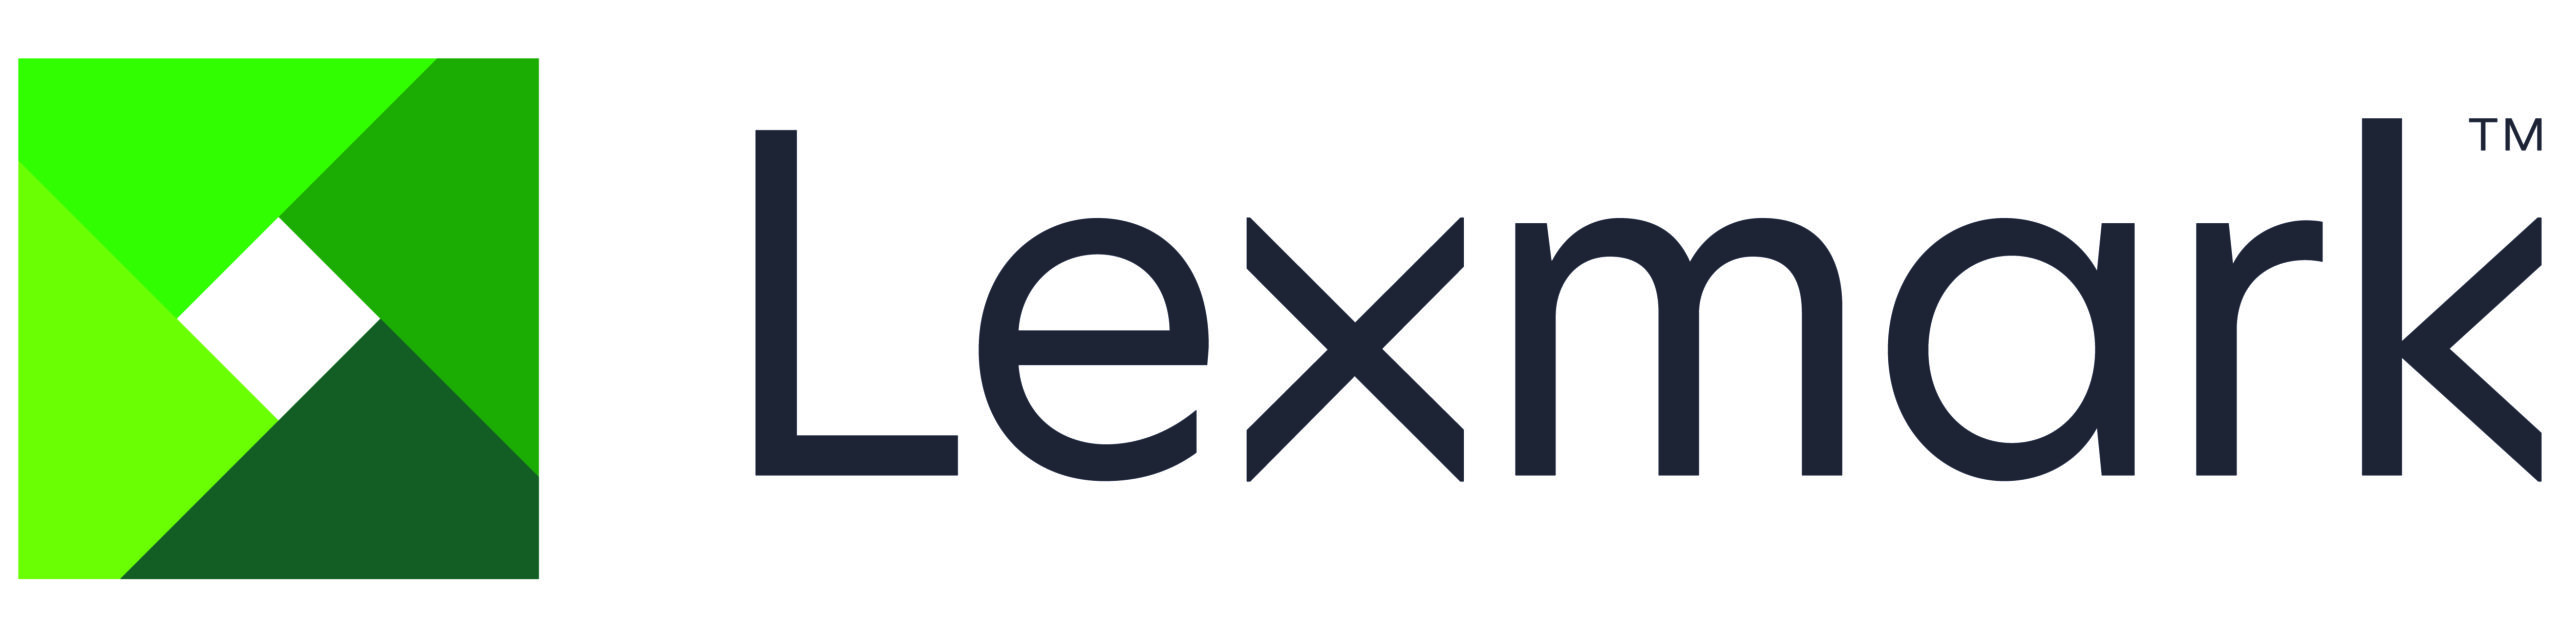 Lexmark Logo 1200x300-01